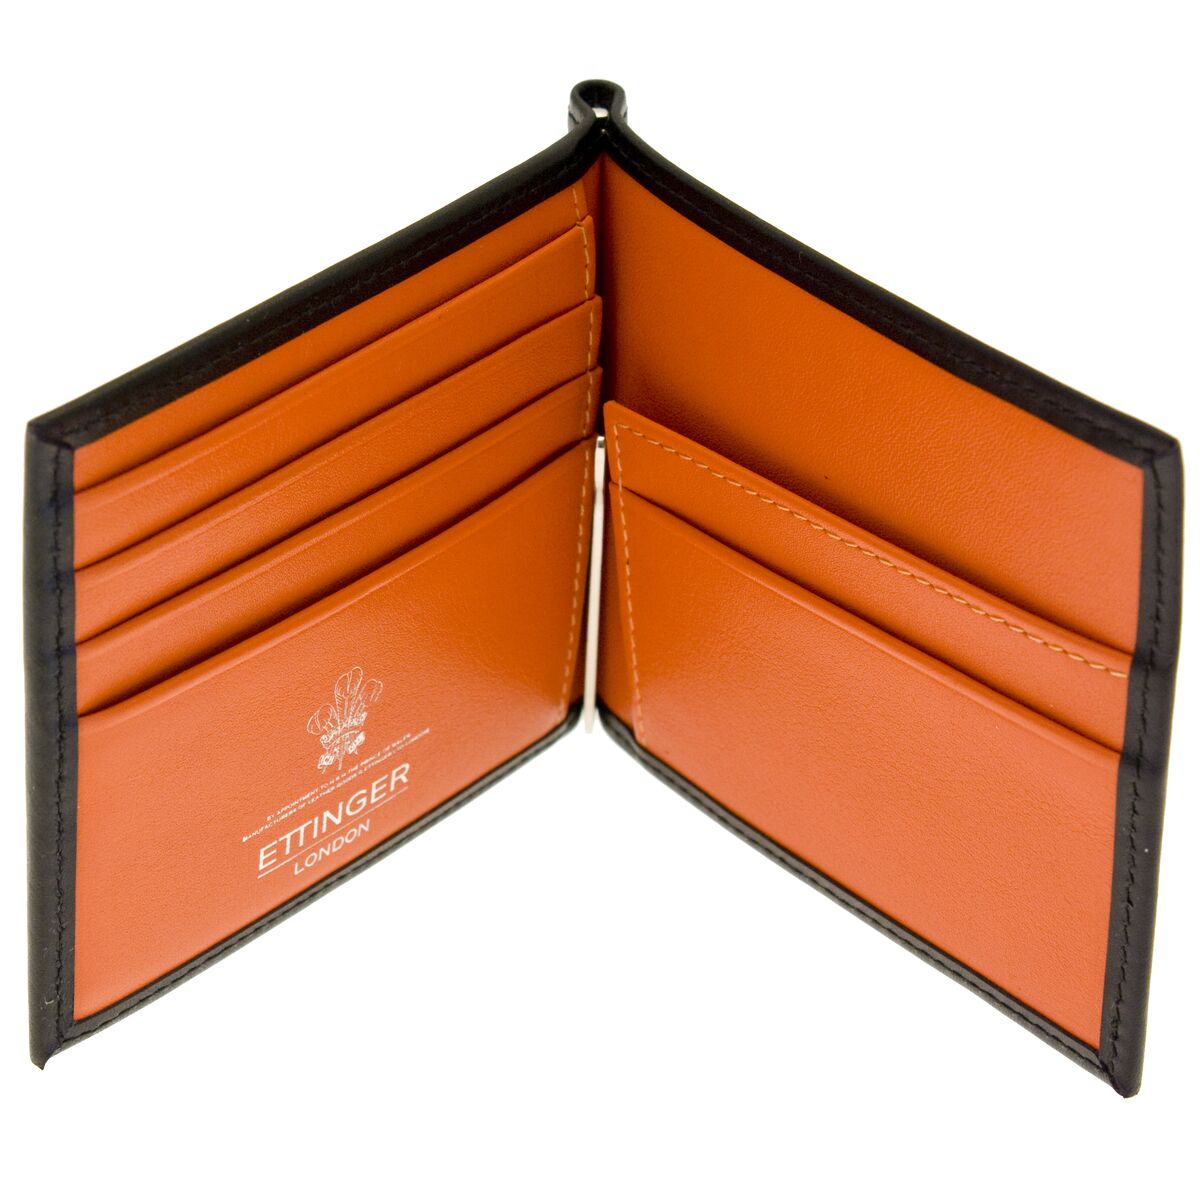 Ettinger Black and Orange Leather Wallet Sterling  Collection